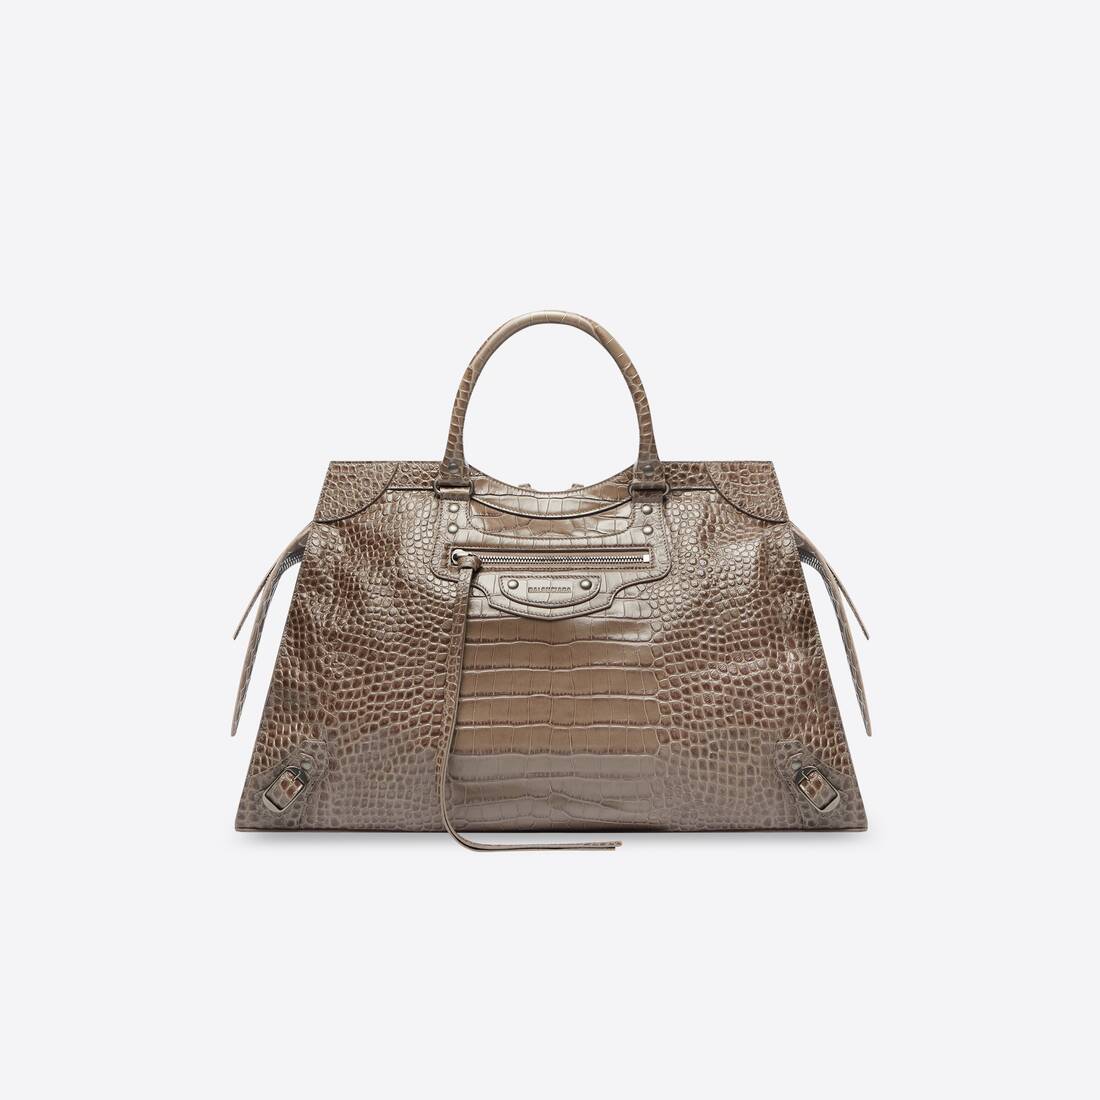 neo classic large handbag crocodile embossed